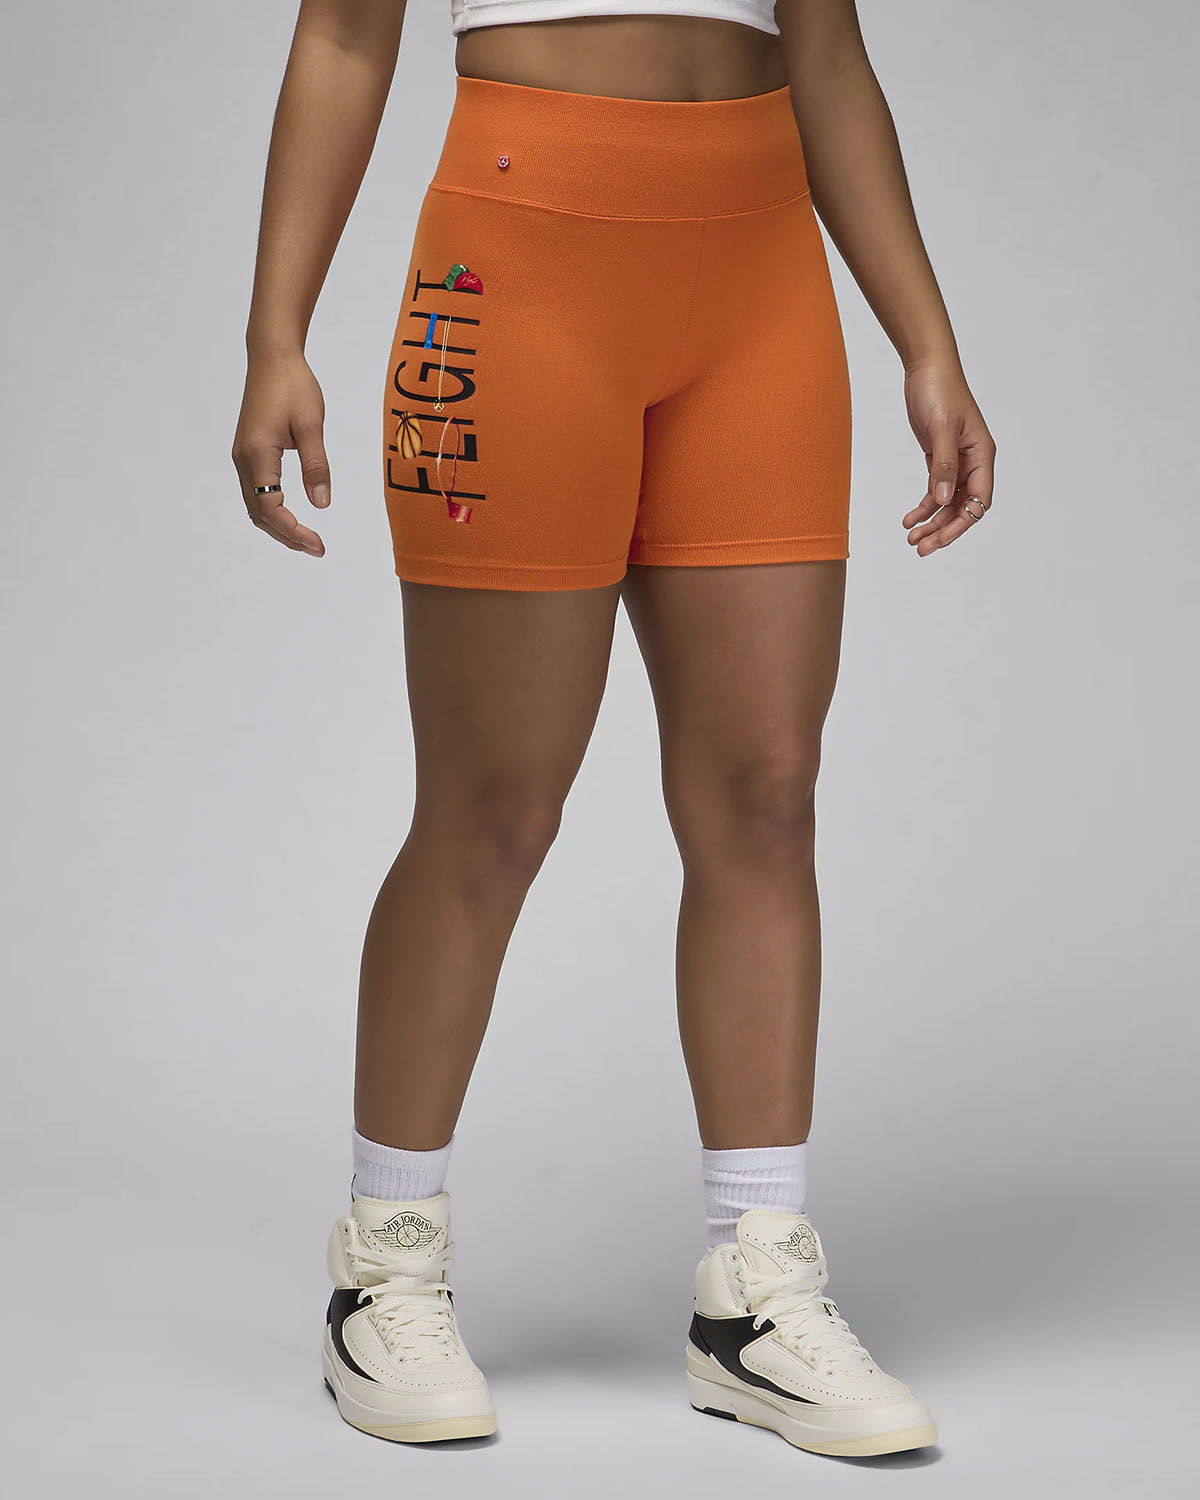 Jordan Artist Series Womens Shorts Orange 1